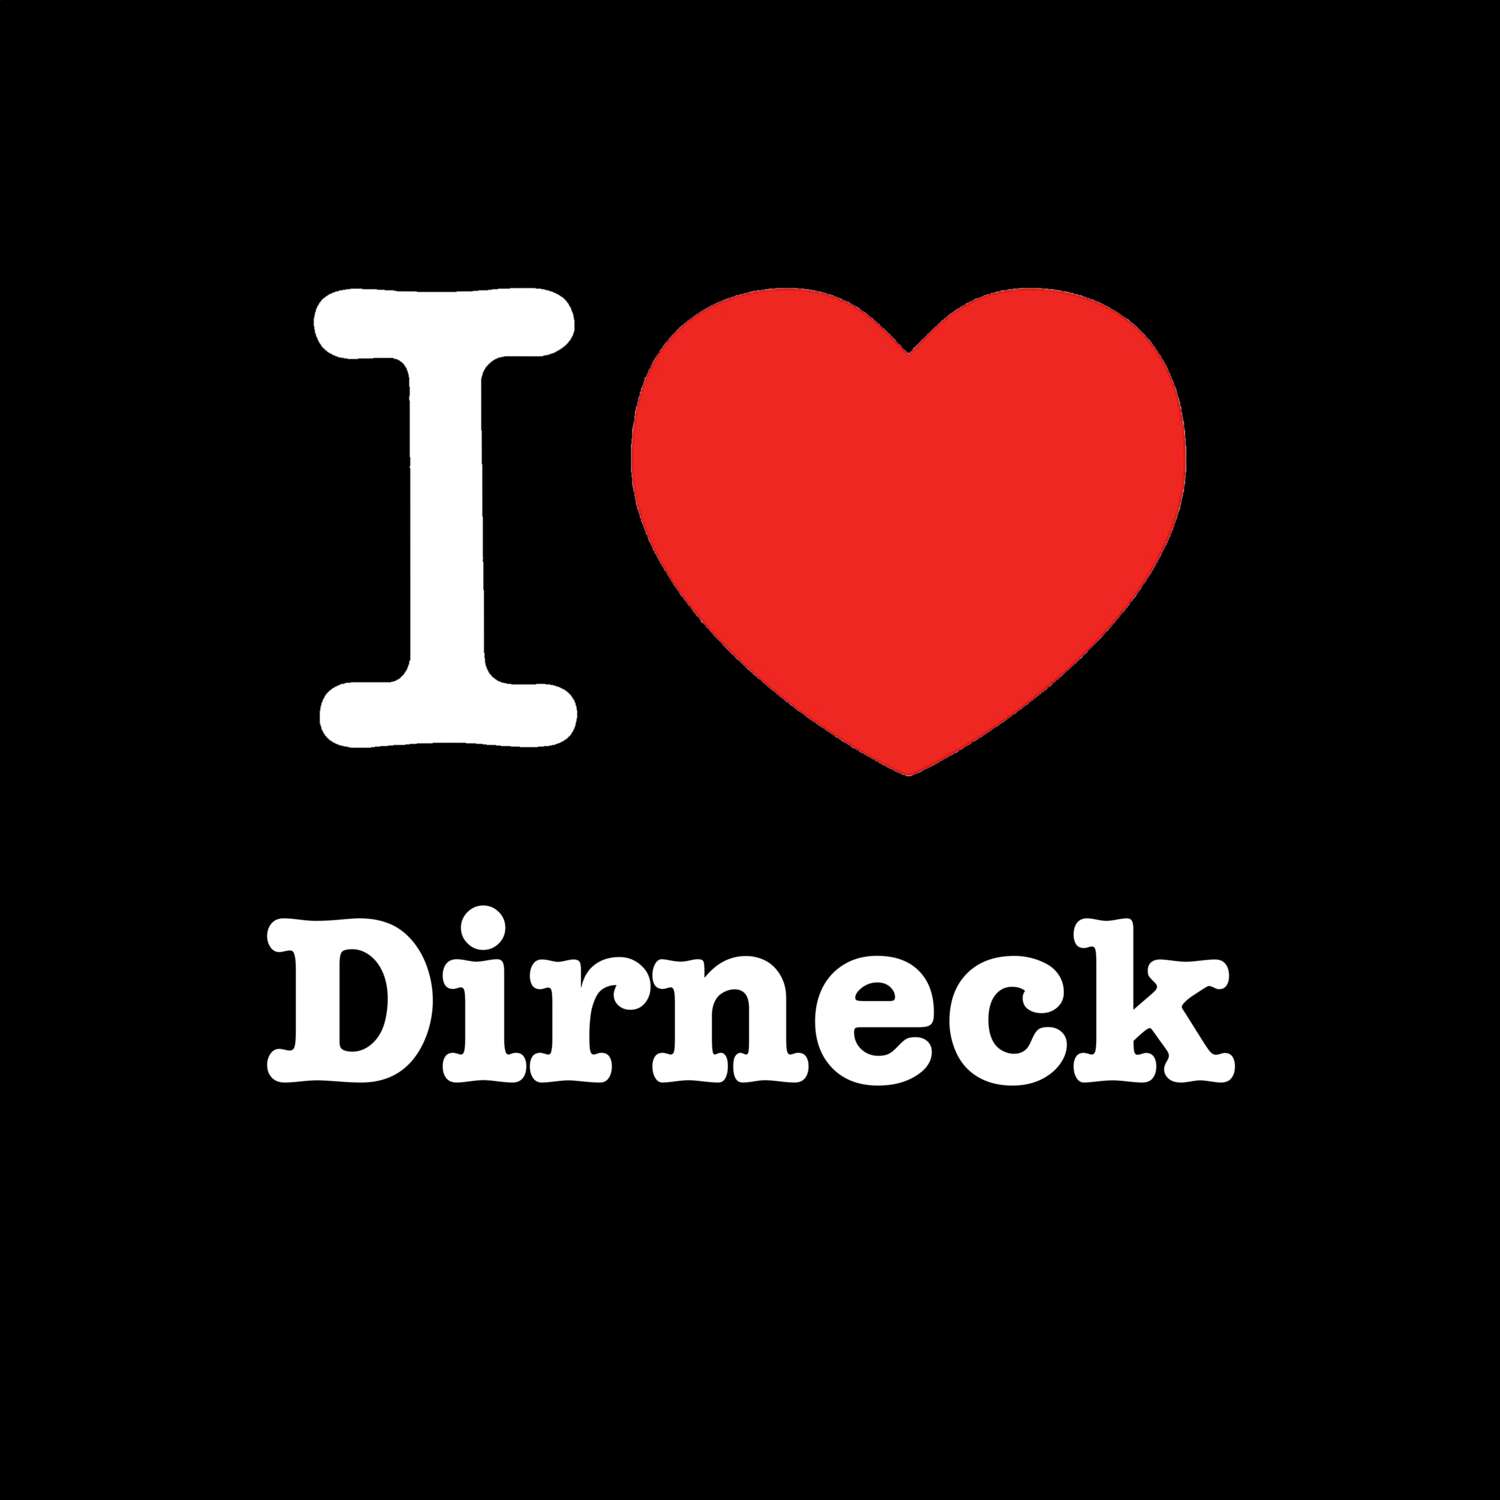 Dirneck T-Shirt »I love«